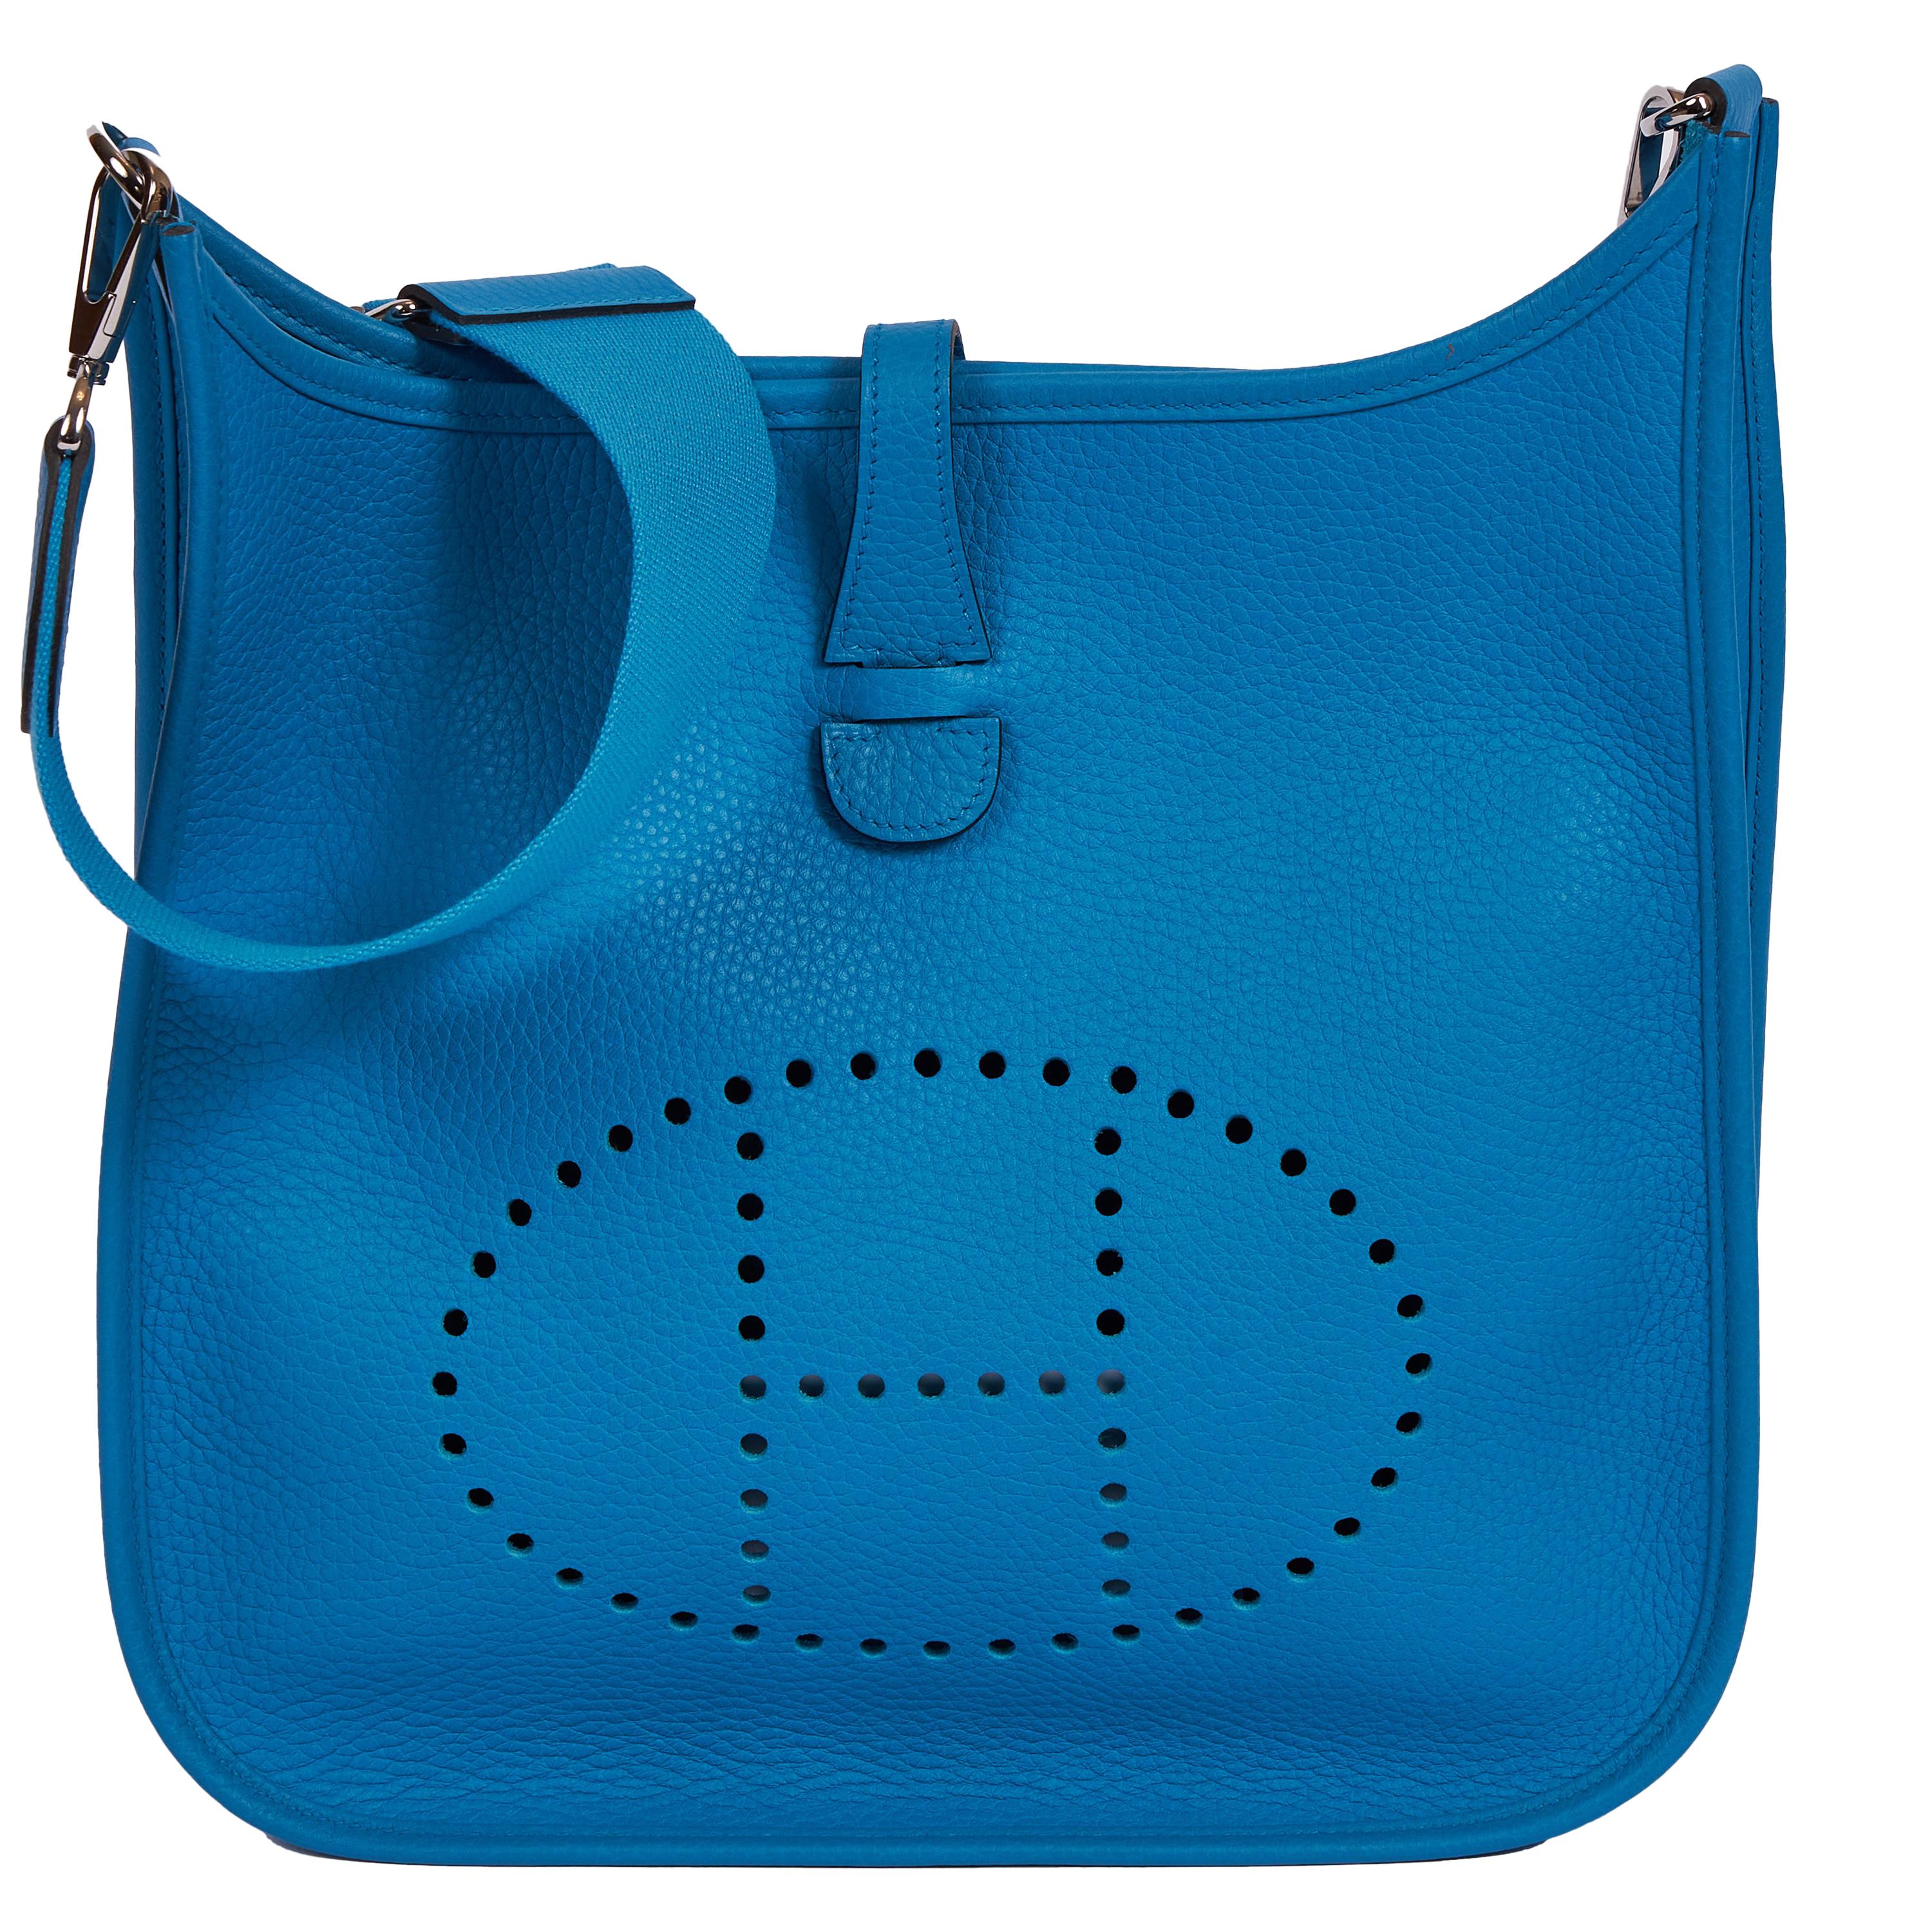 New In Box Hermes Blue Zellige Evelyne PM Bag